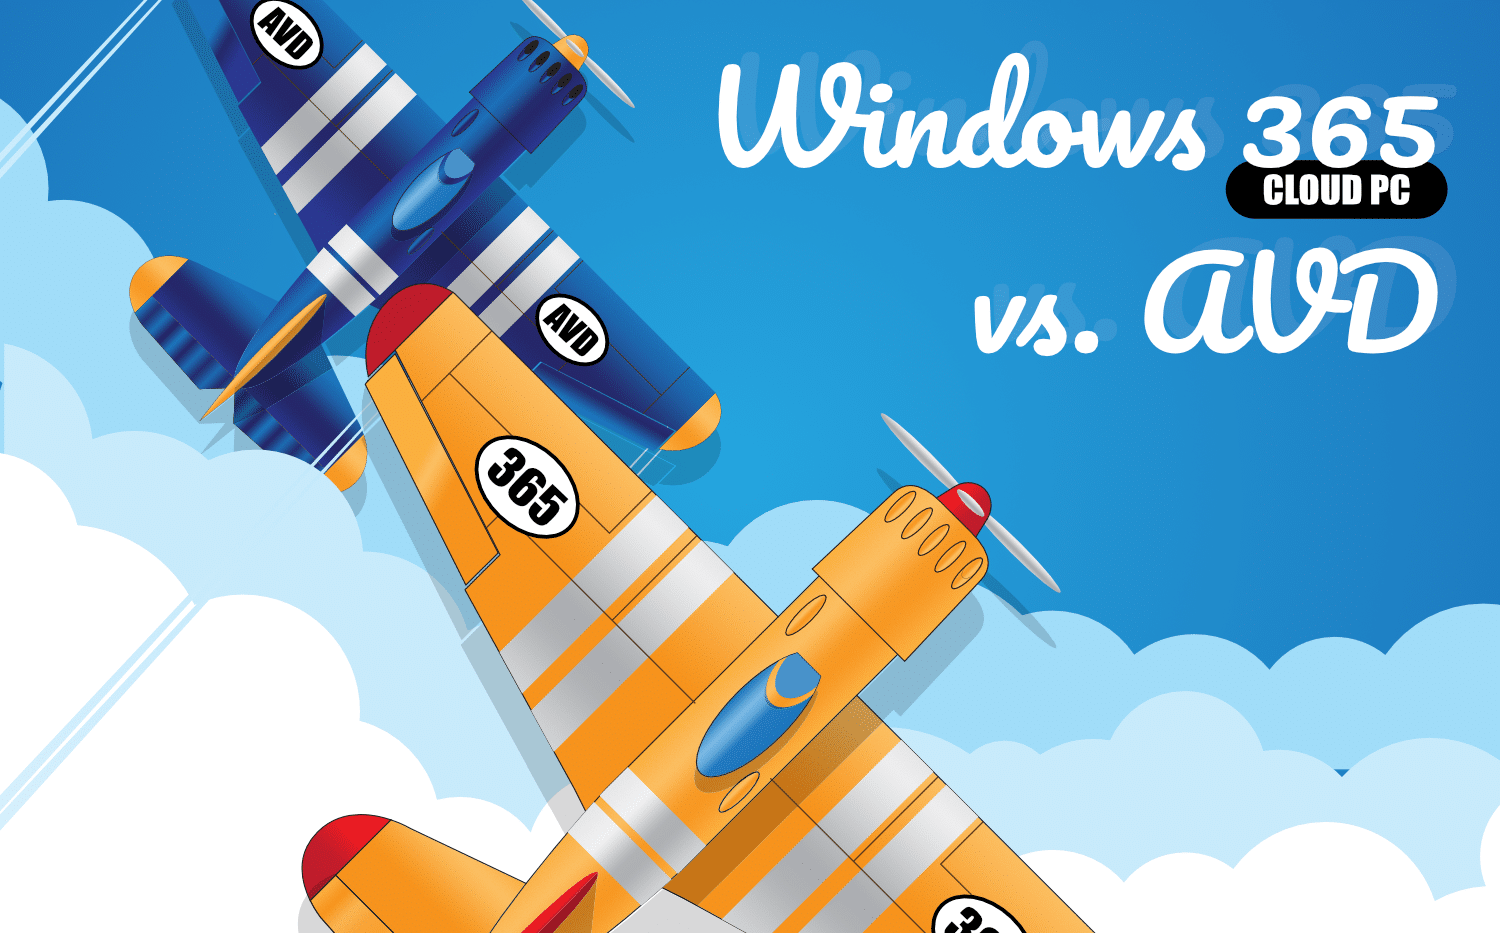 Windows 365 Cloud PC vs AVD